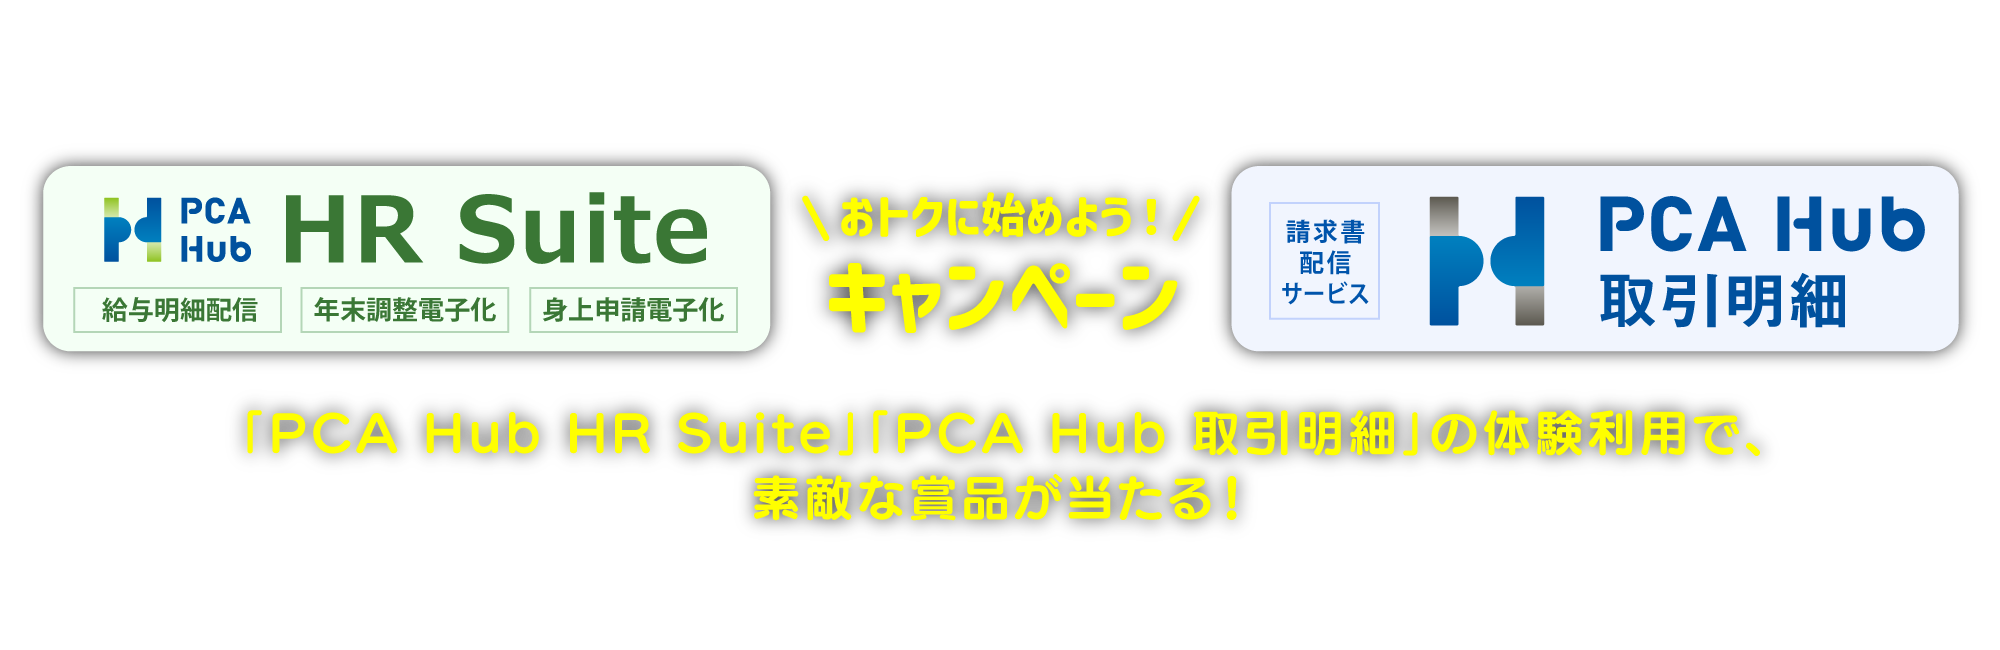 「PCA Hub HR Suite」「PCA Hub 取引明細」の体験利用で素敵な賞品が当たるキャンペーン